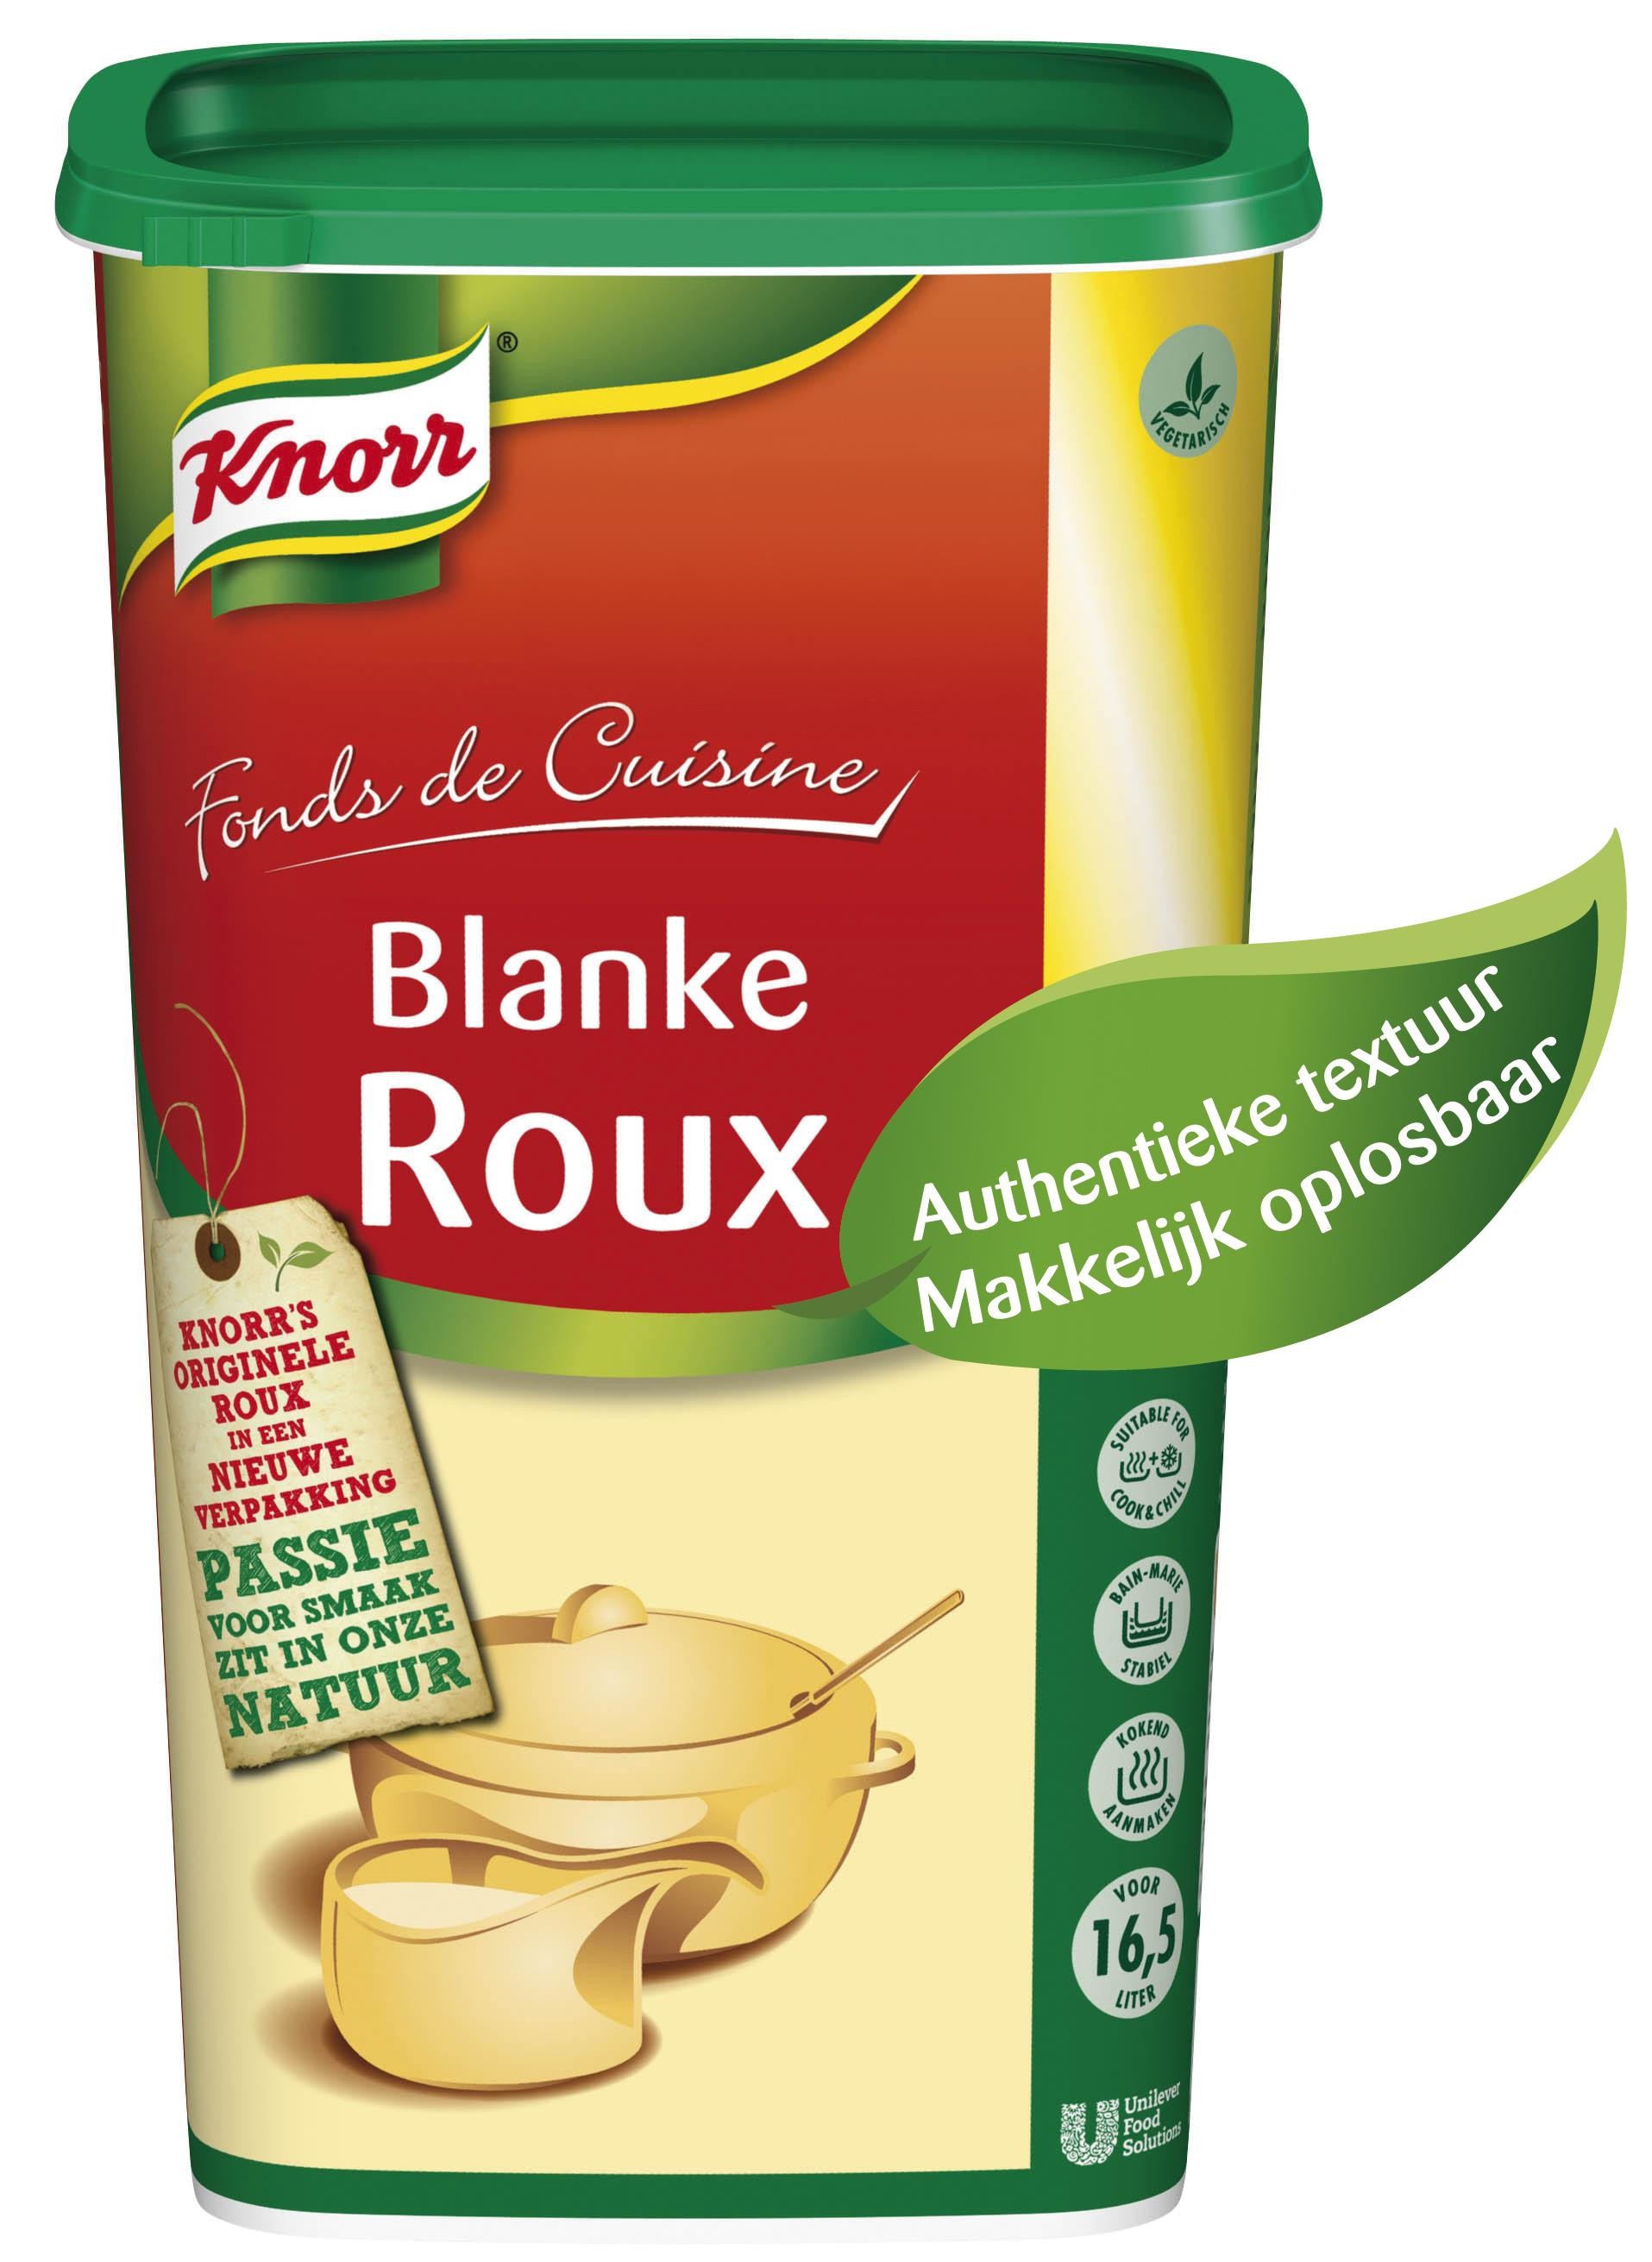 Knorr blanke roux 1kg